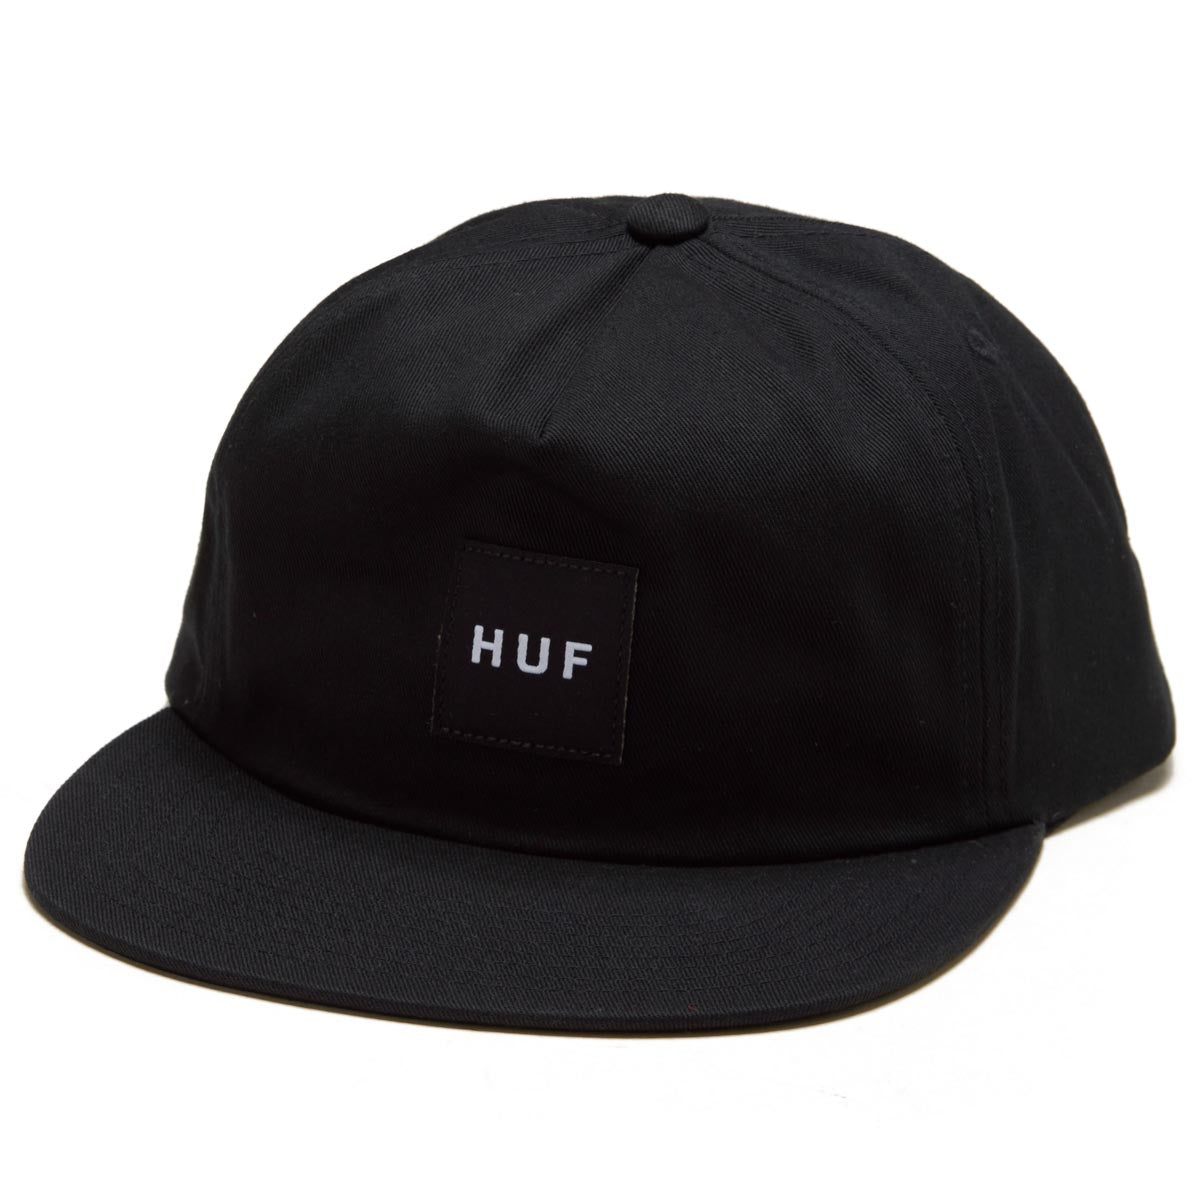 HUF Set Box Snapback Hat - Black image 1